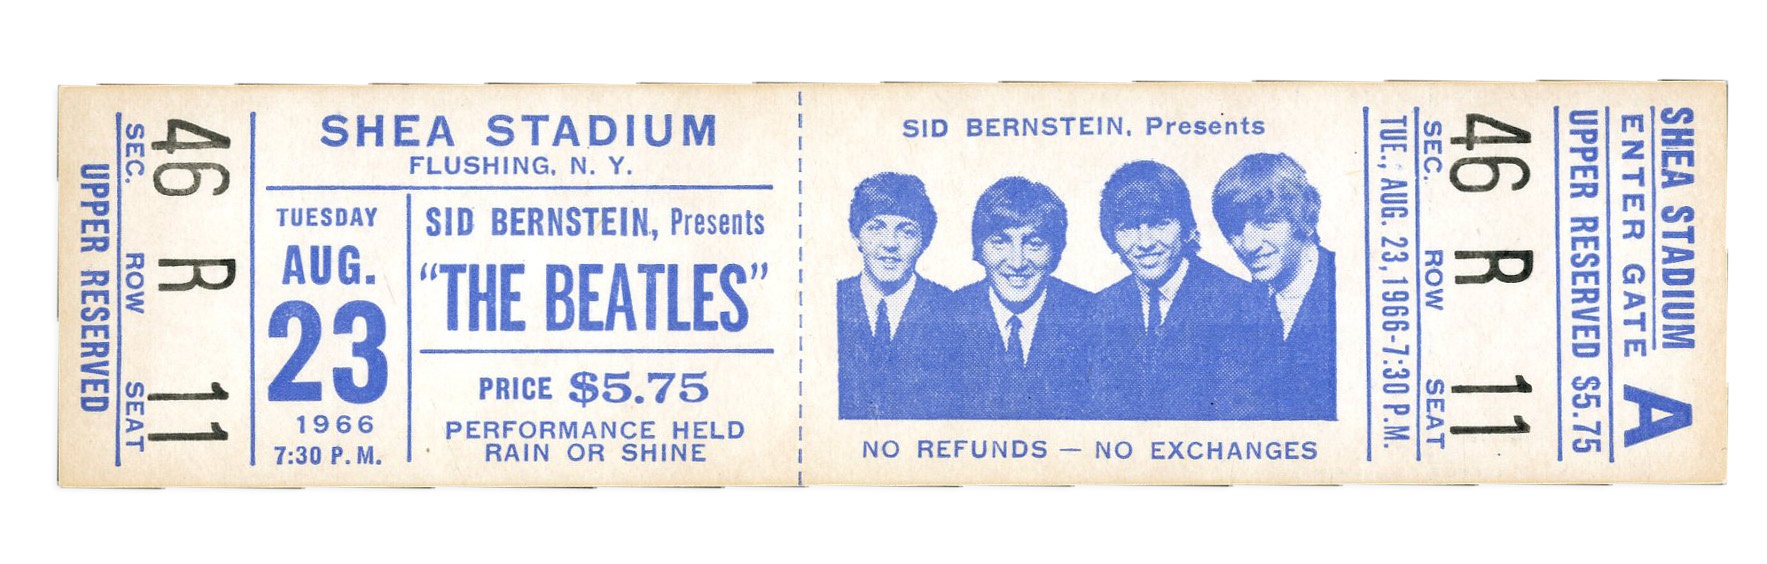 Rock 'N' Roll - 1966 The Beatles at Shea Stadium Full Ticket